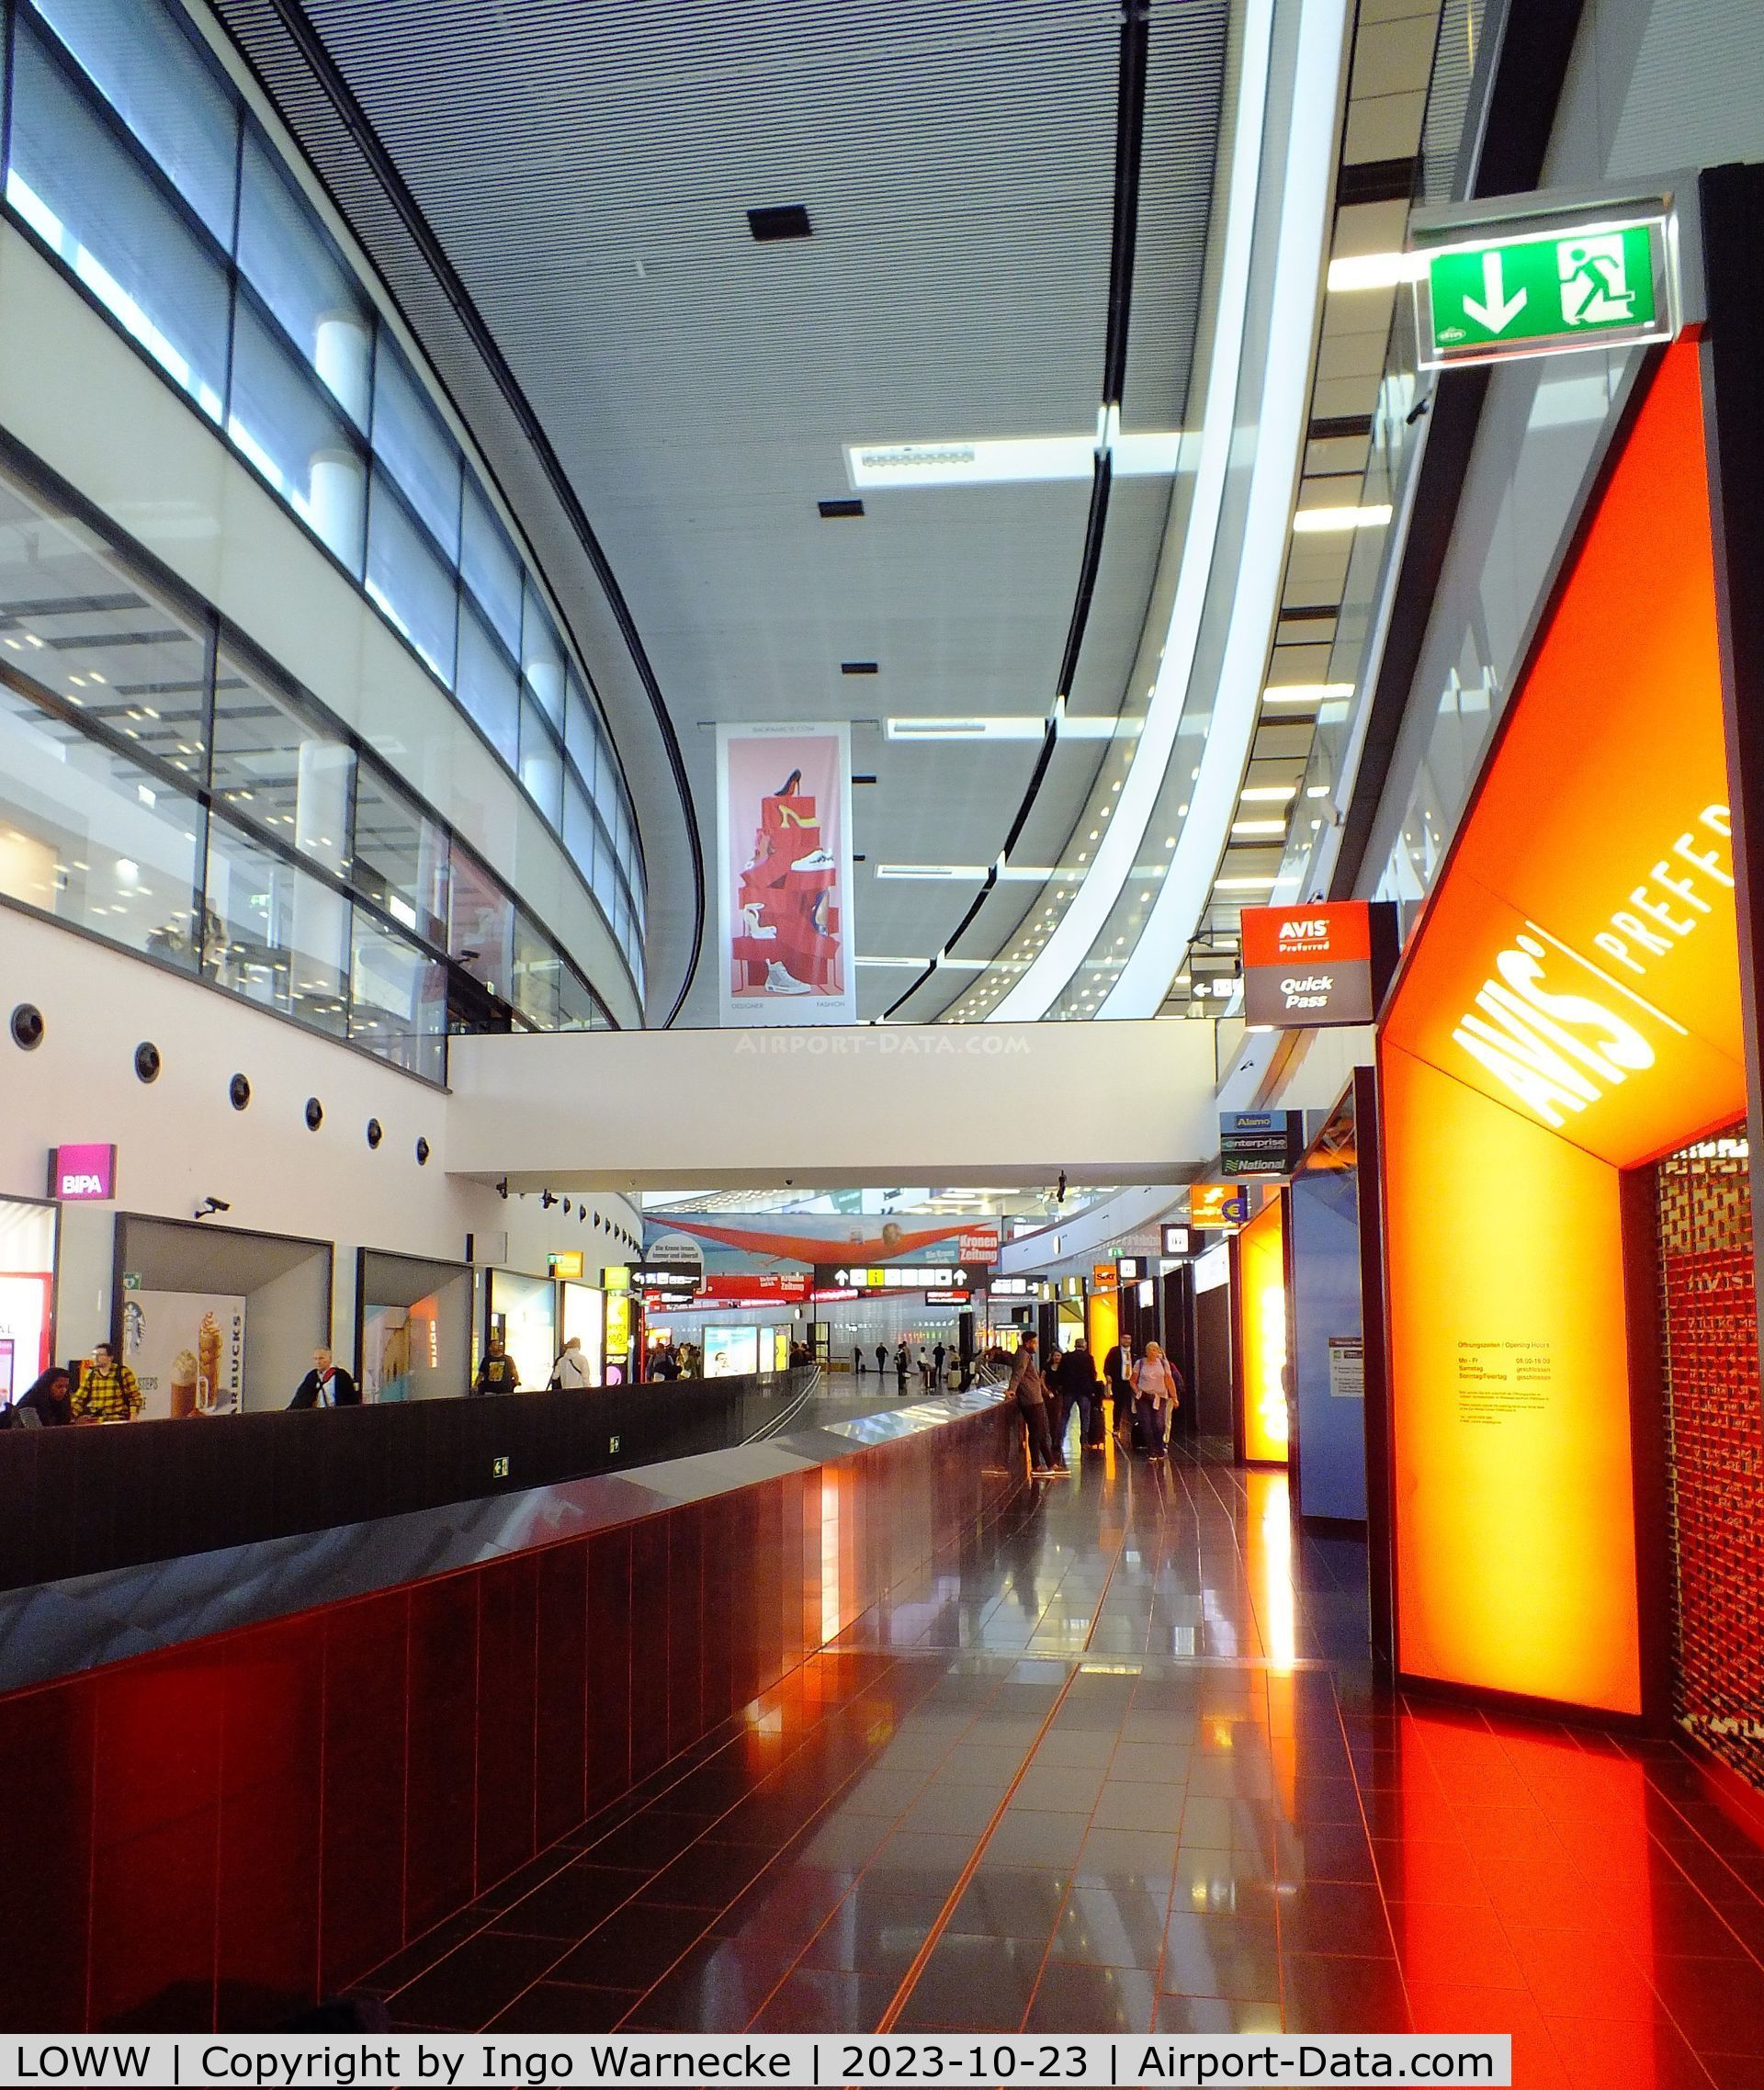 Vienna International Airport, Vienna Austria (LOWW) - inside terminal 3 at Wien airport